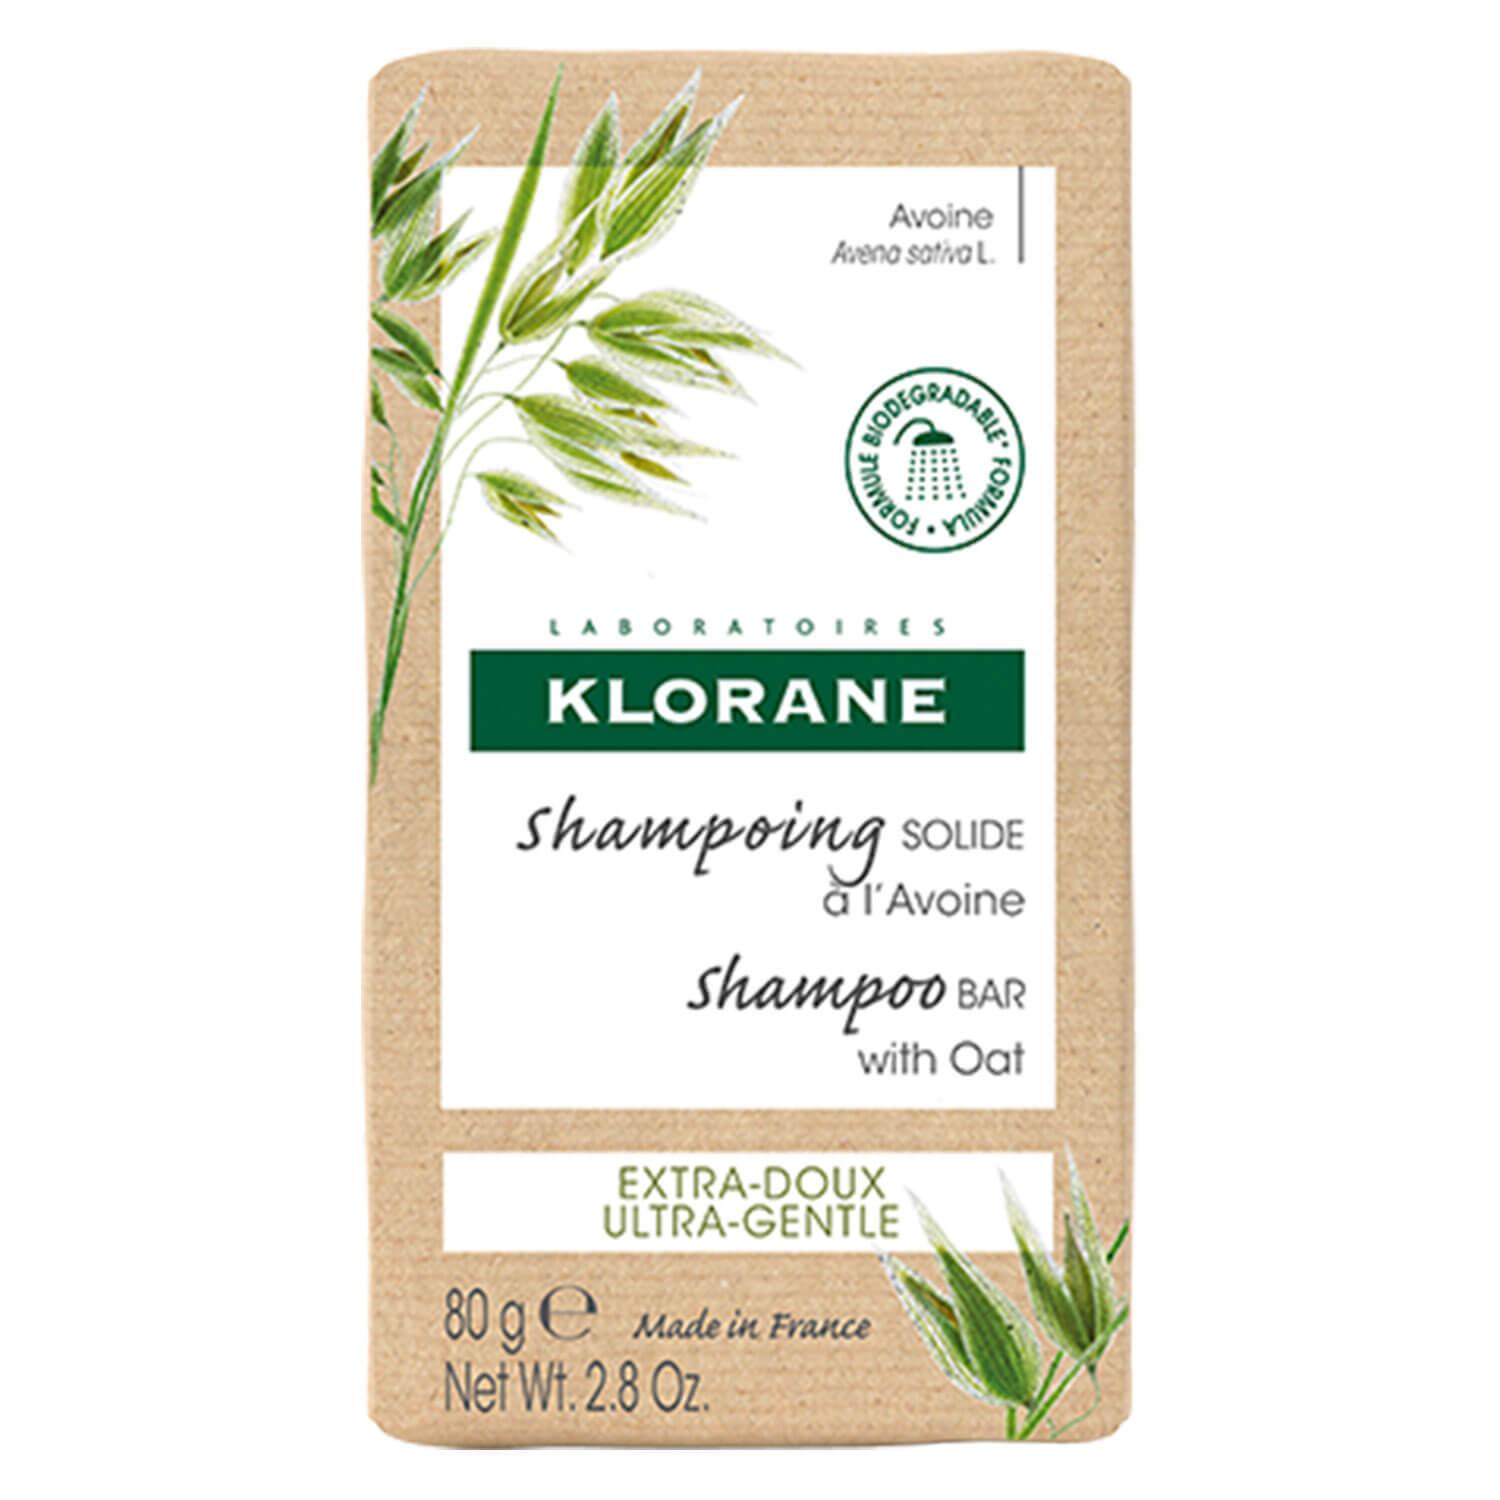 KLORANE Hair - Shampoo Bar with Oat